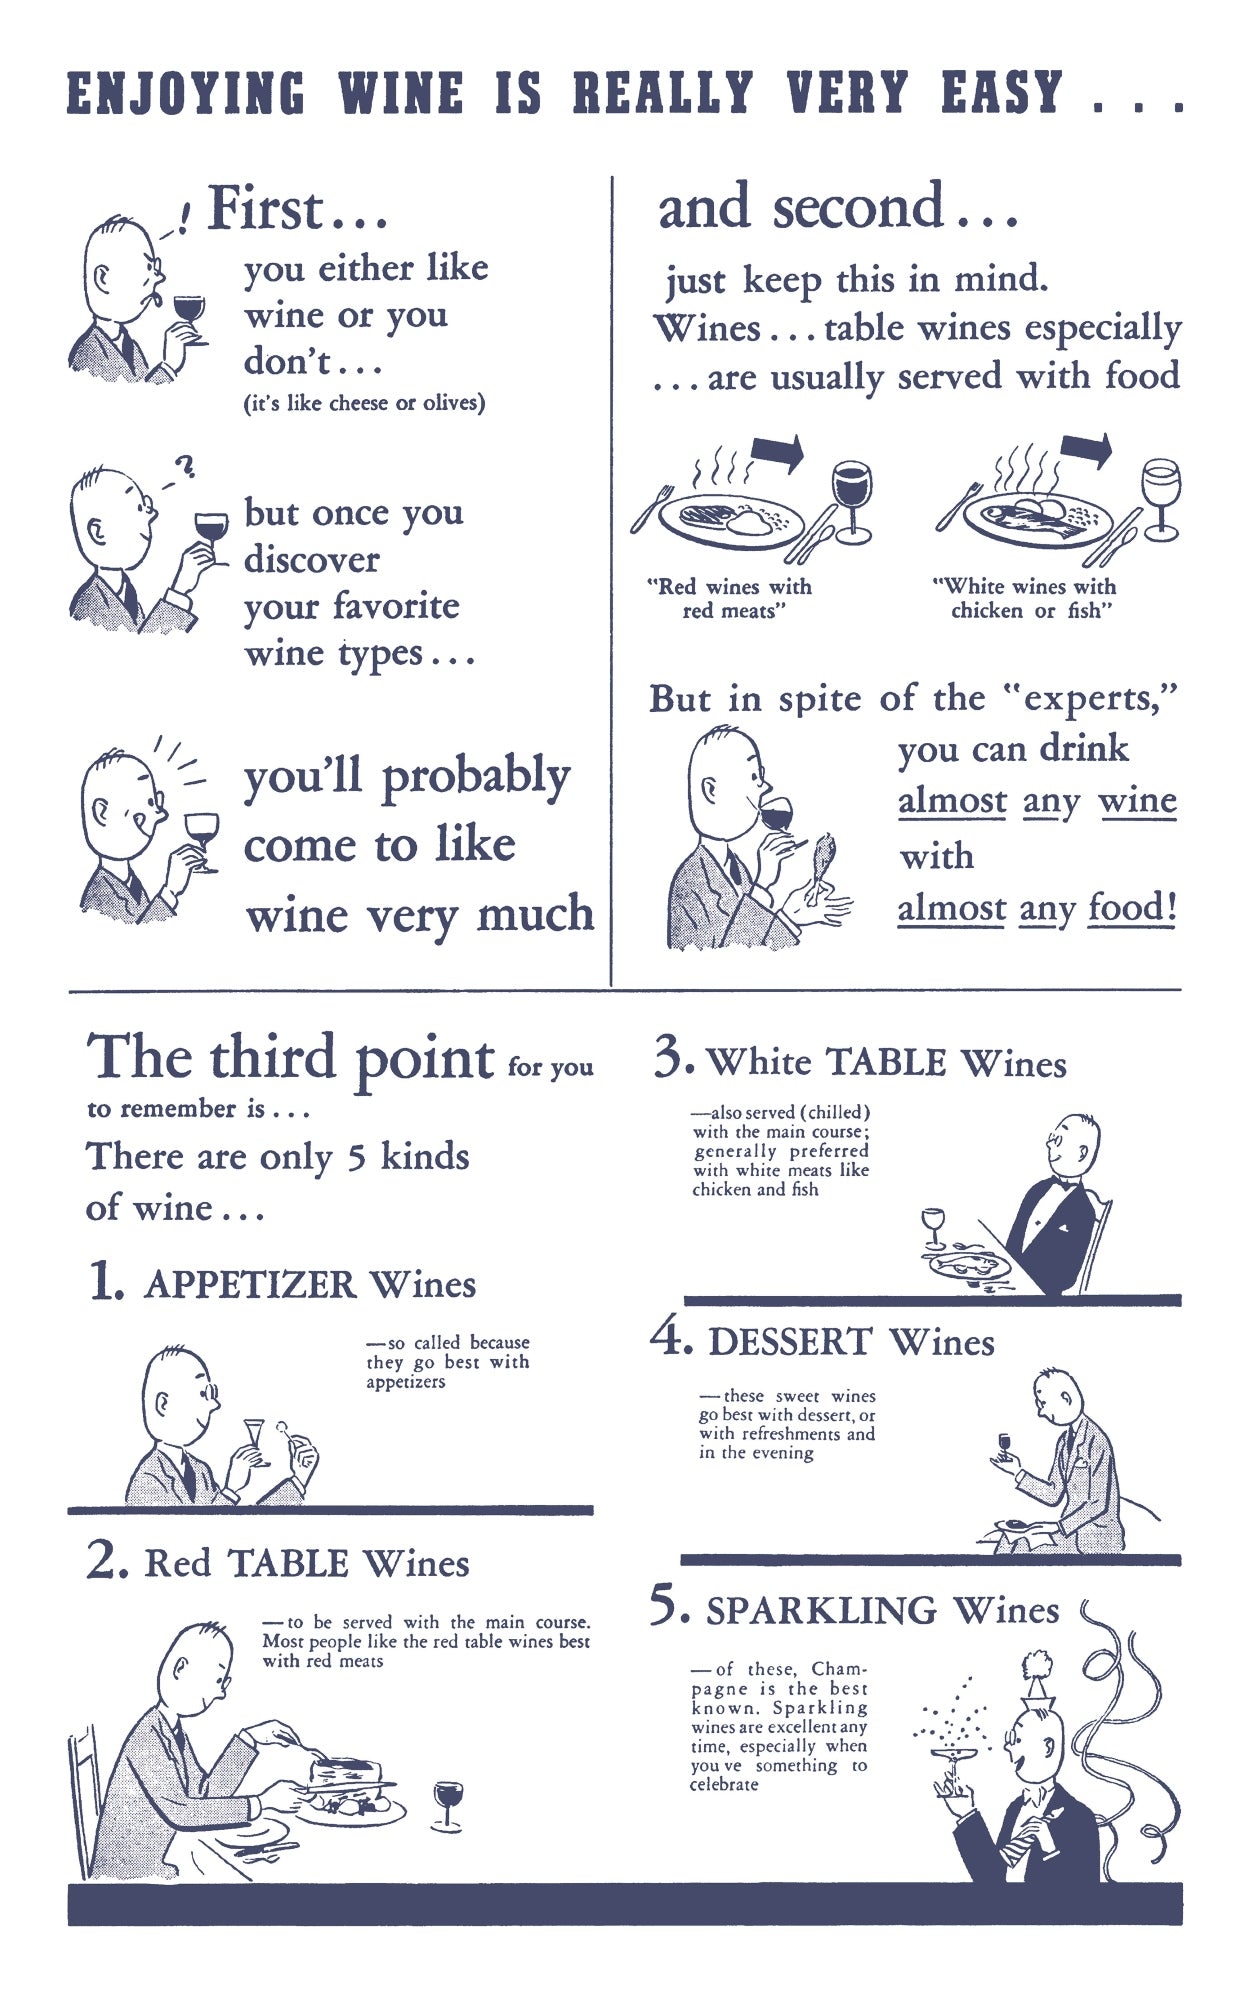 Tiny's Guide to Enjoying Wine, California 1945 Dish Towel